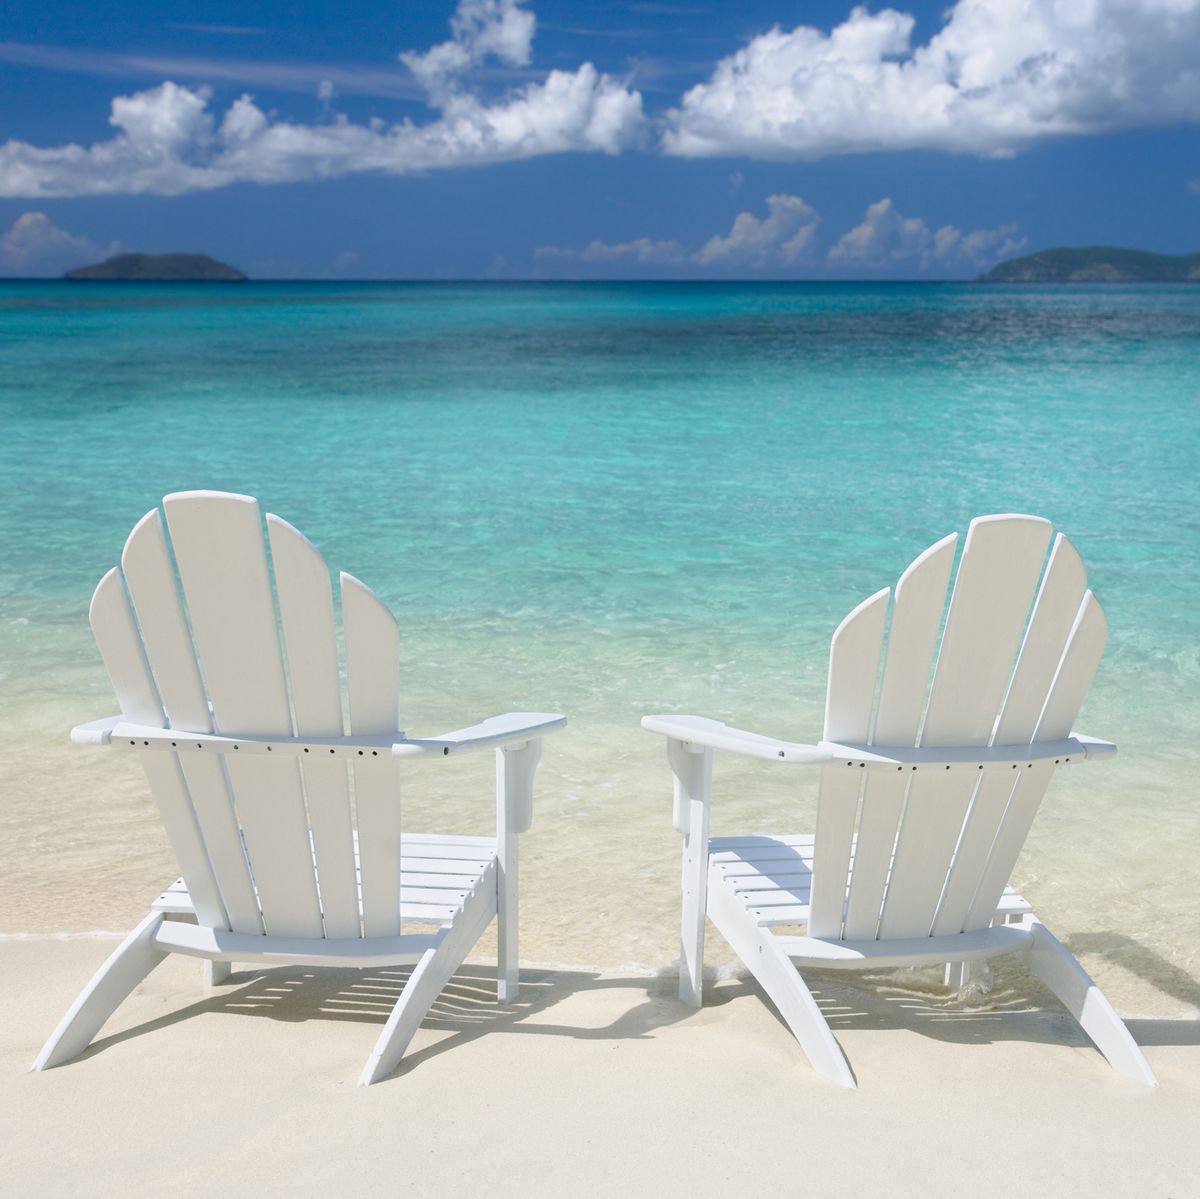 white chairs on the Caribbean beach